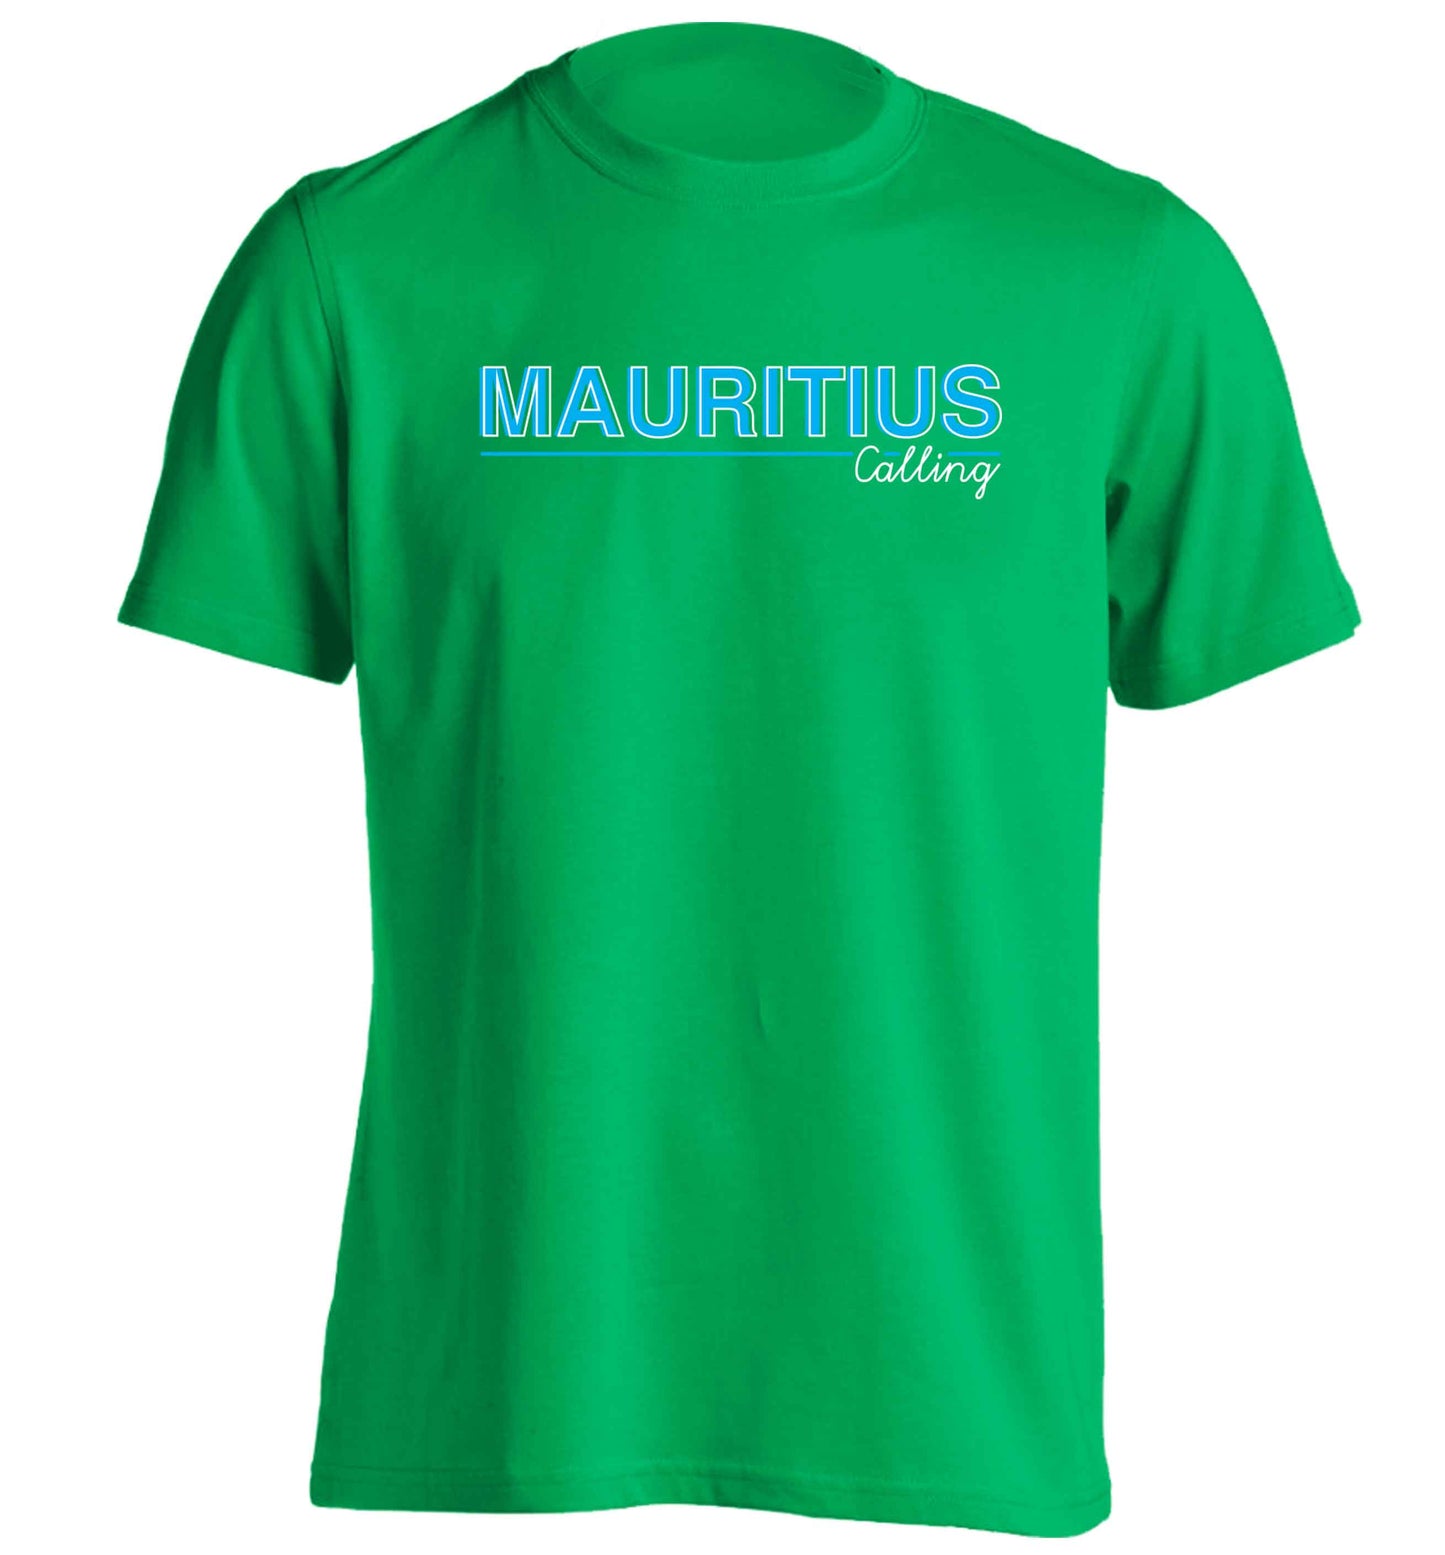 Mauritius calling adults unisex green Tshirt 2XL